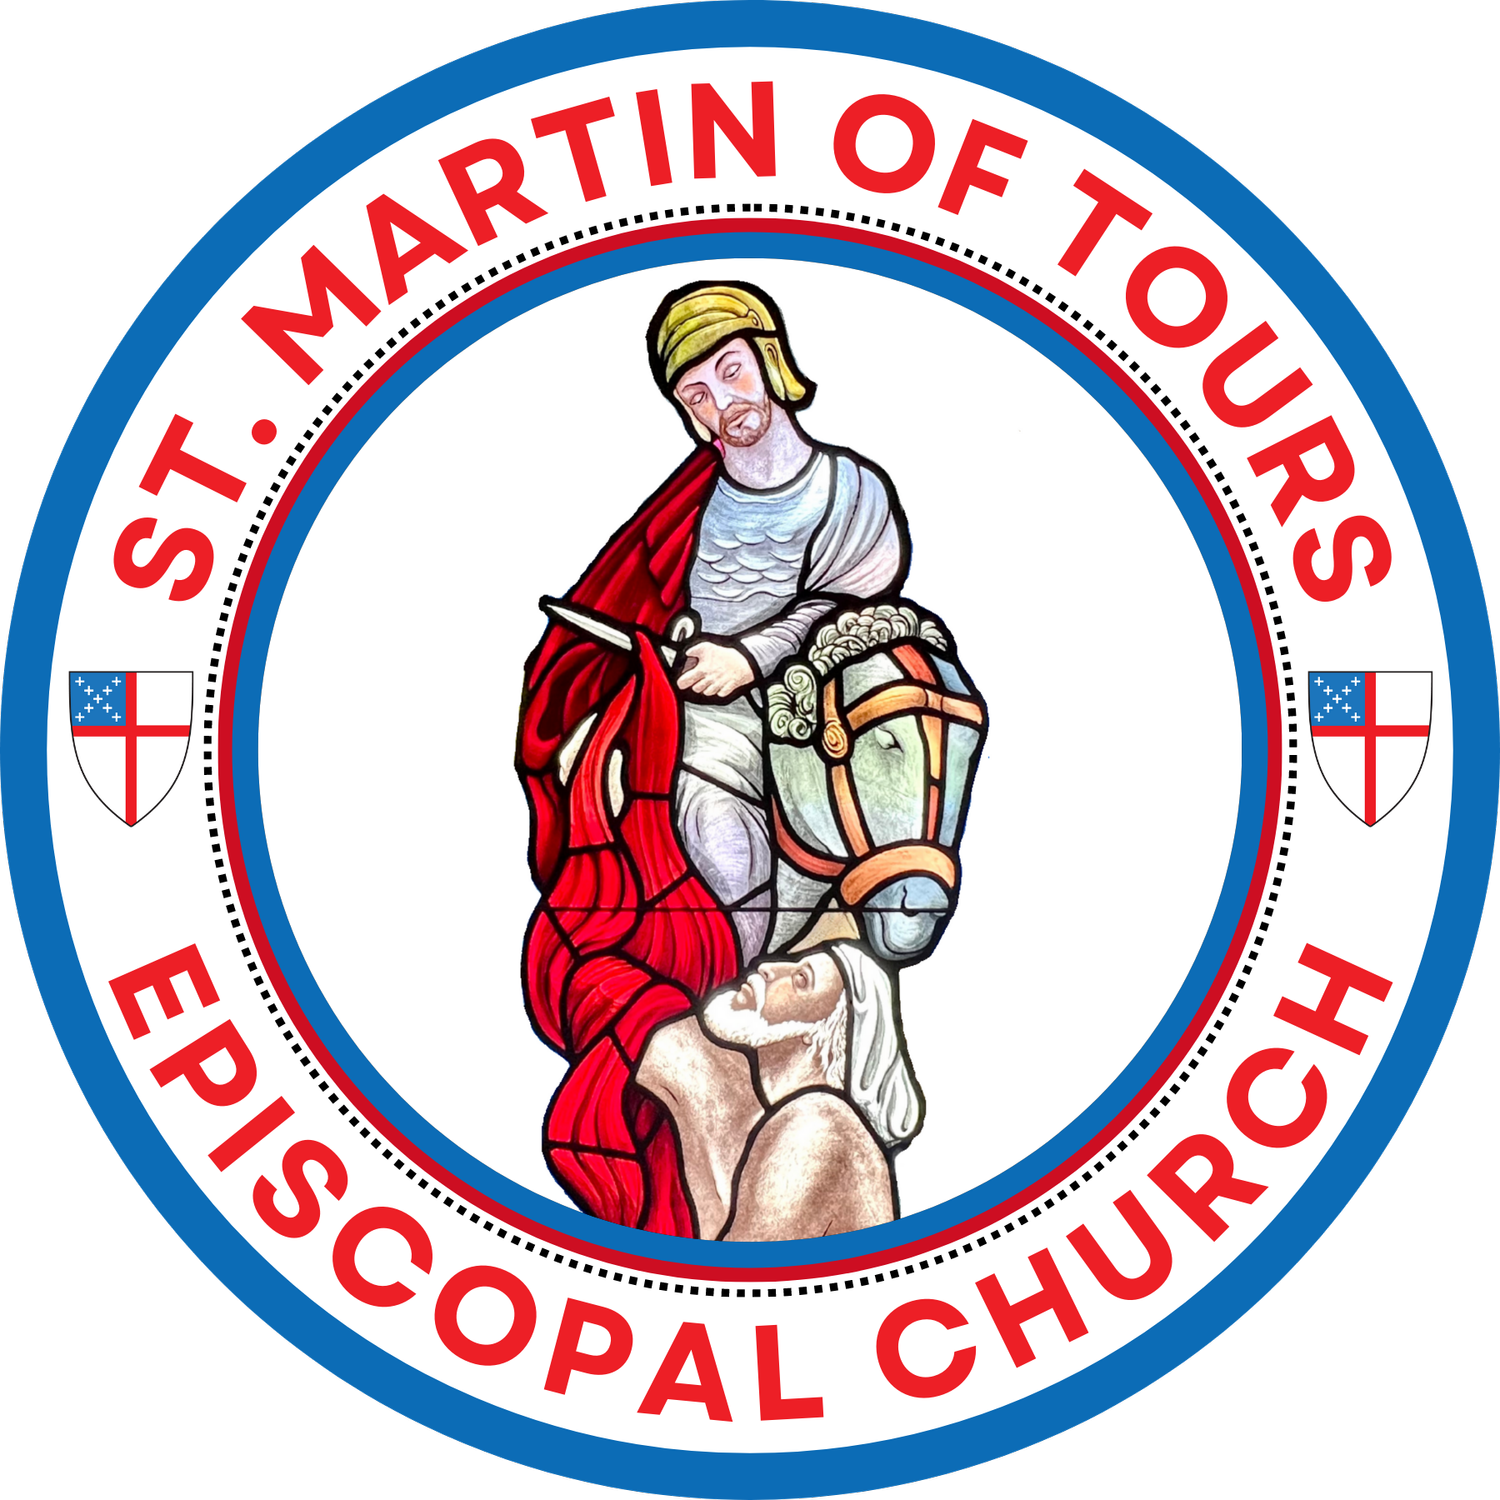 St. Martin of Tours Episcopal Church